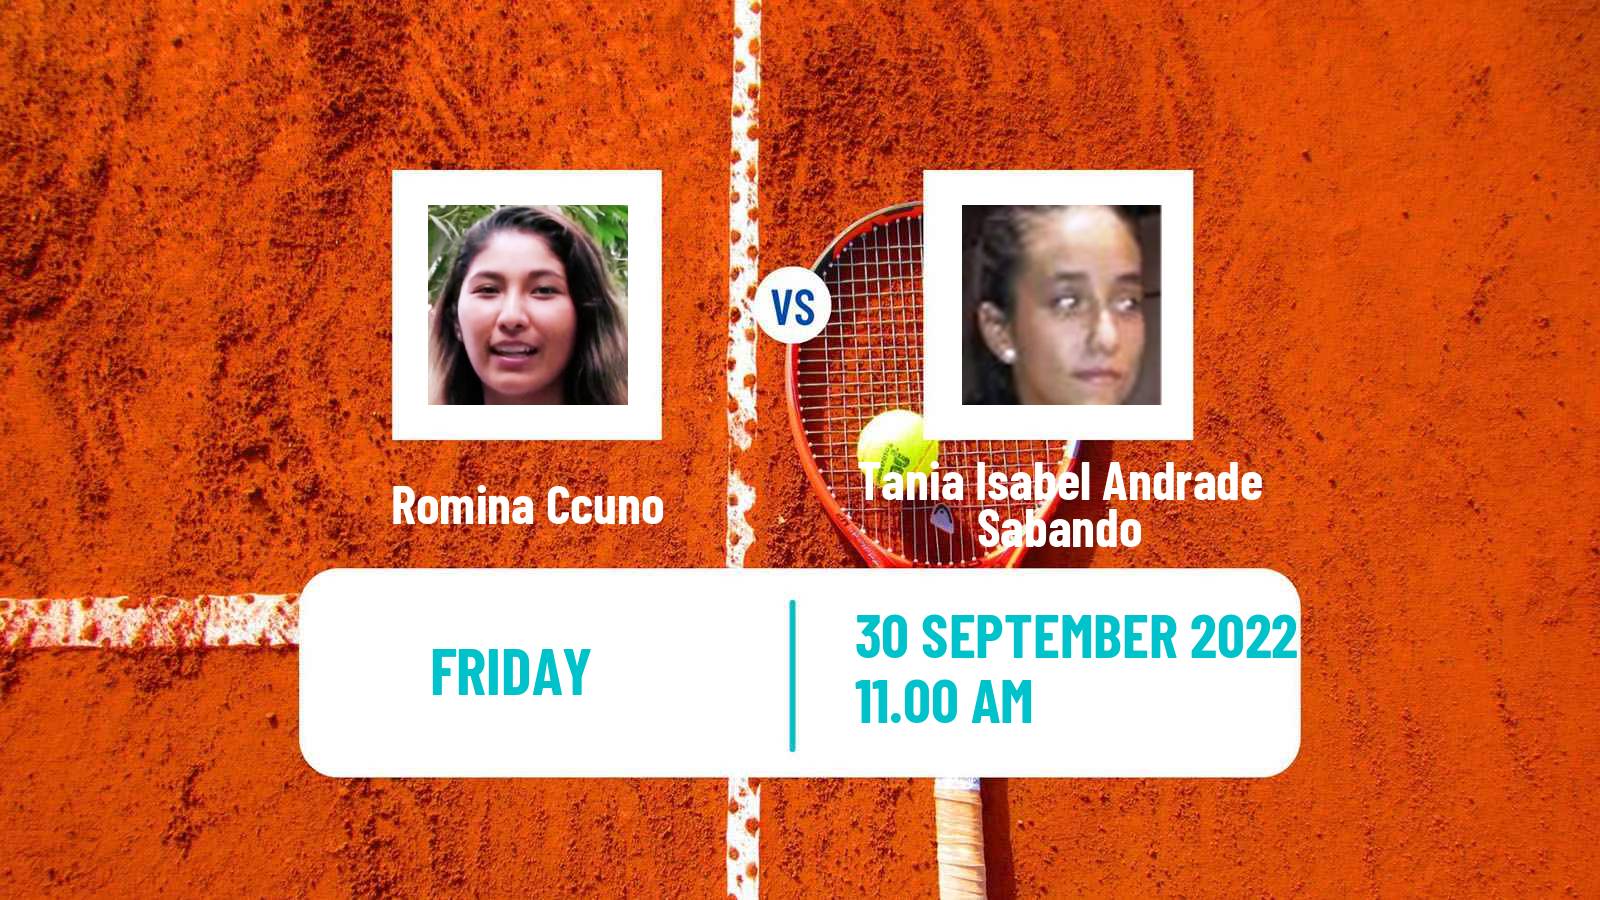 Tennis ITF Tournaments Romina Ccuno - Tania Isabel Andrade Sabando